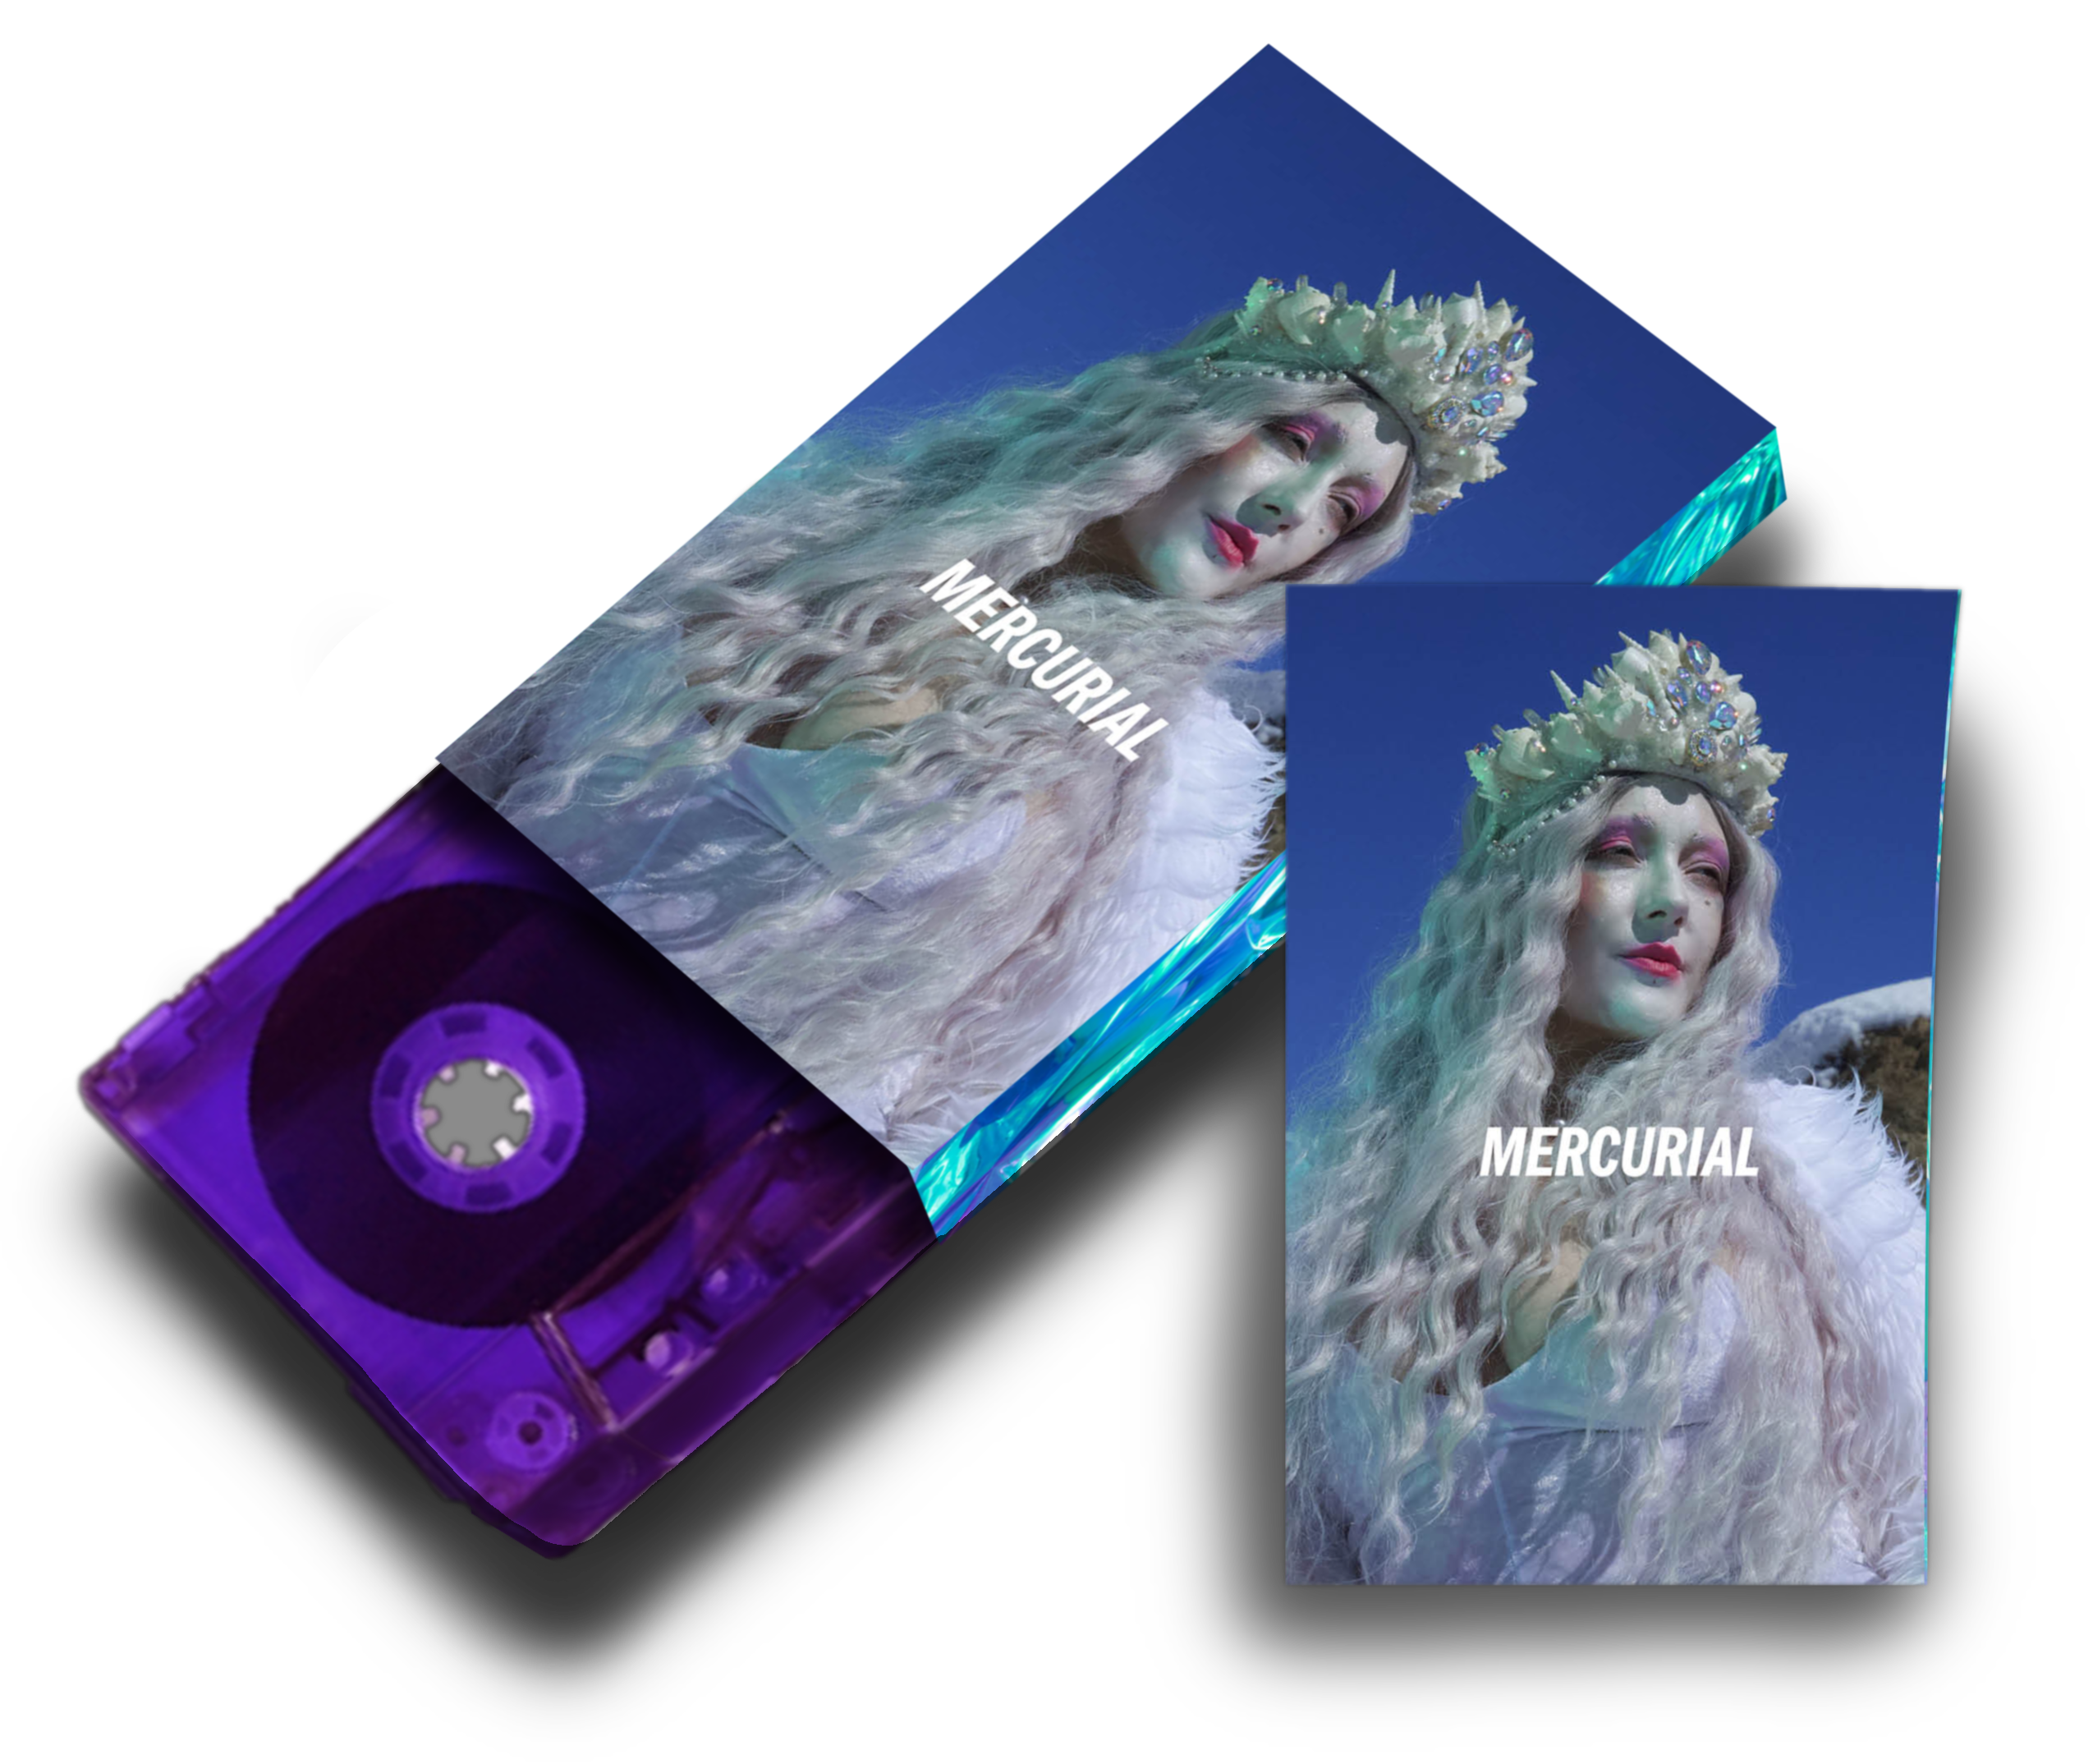 Elisabeth Elektra - ‘Mercurial’ Ltd Edition Cassette Mini Zine Duo - Transparent Purple